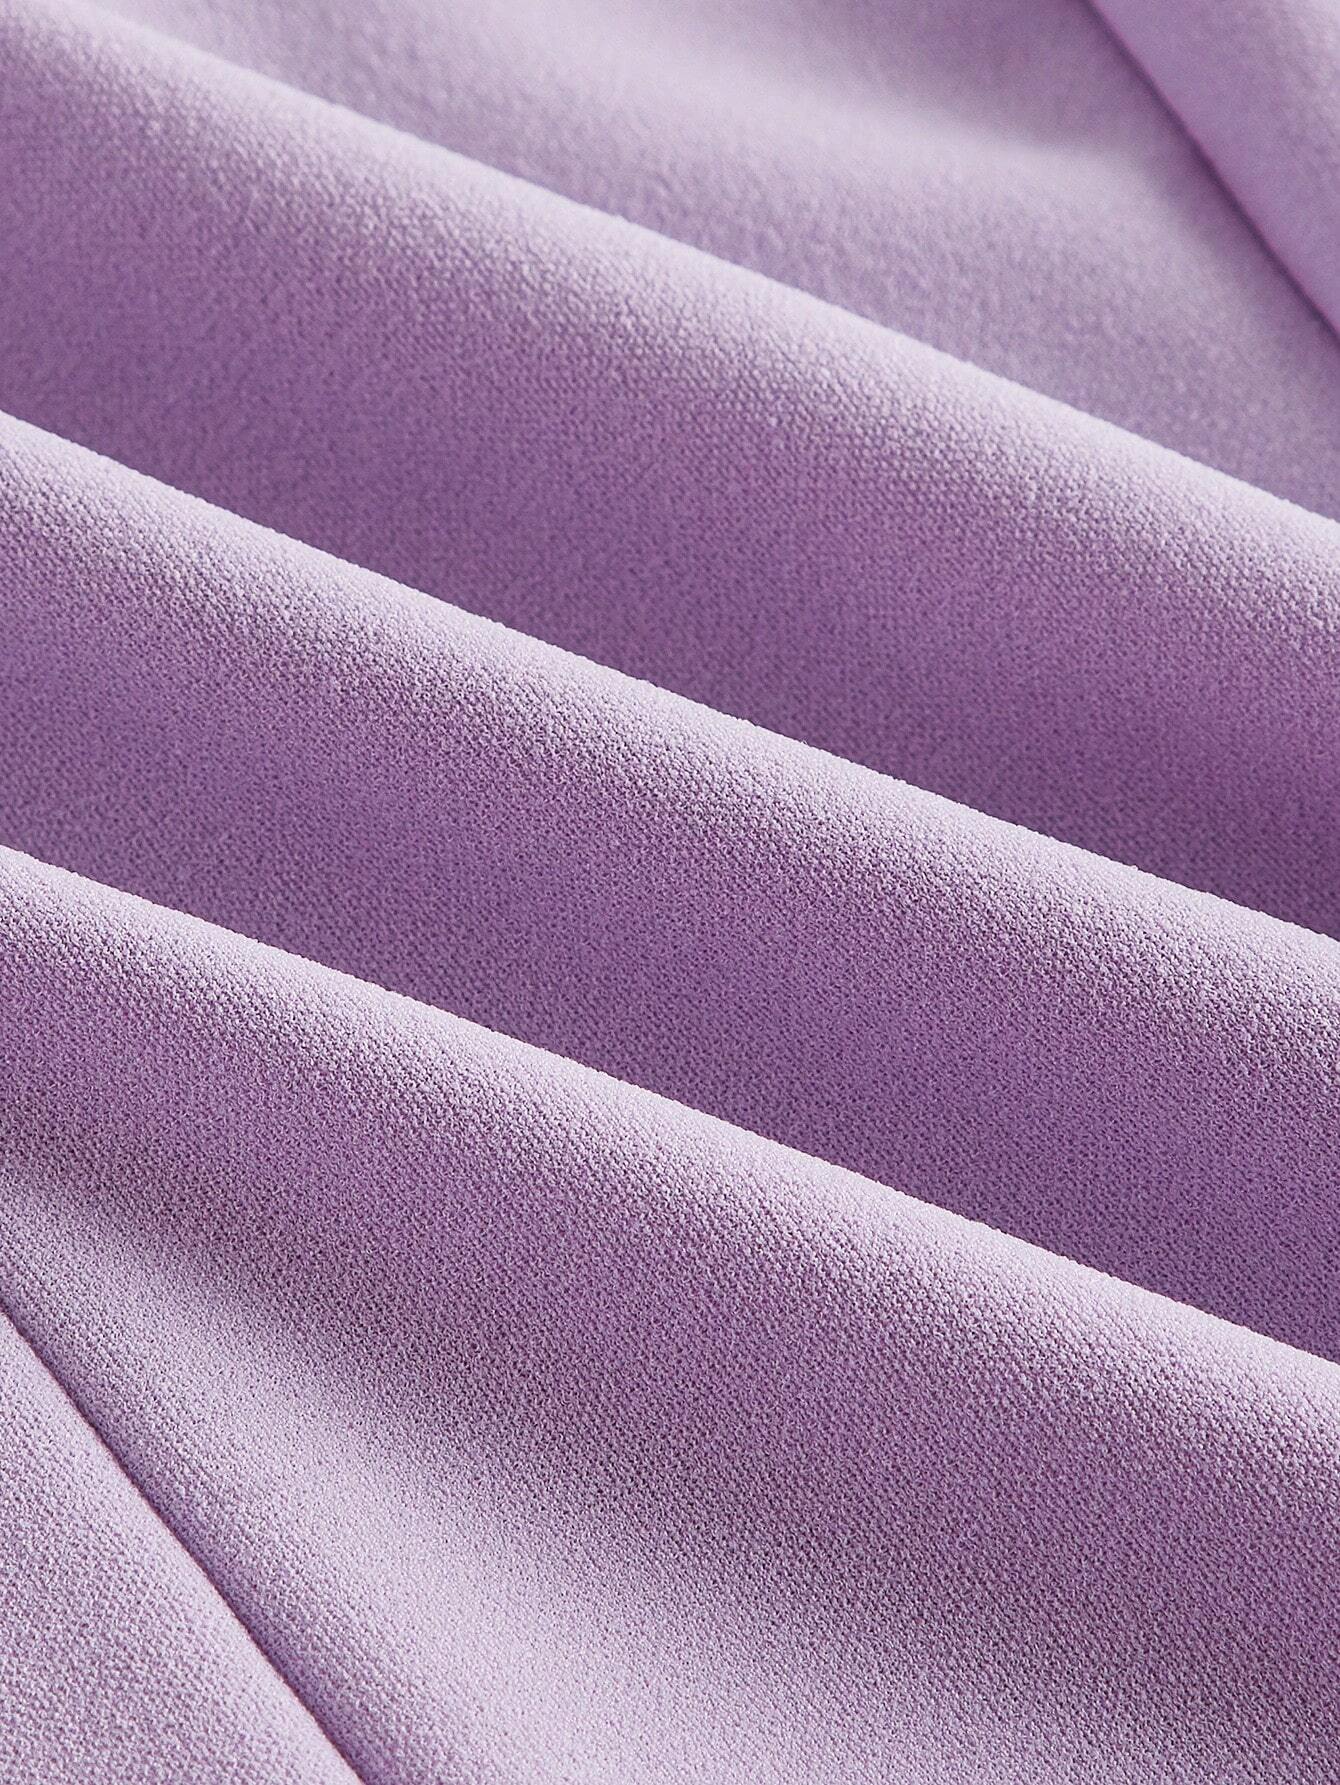 Lavender Bustier Midi Dress